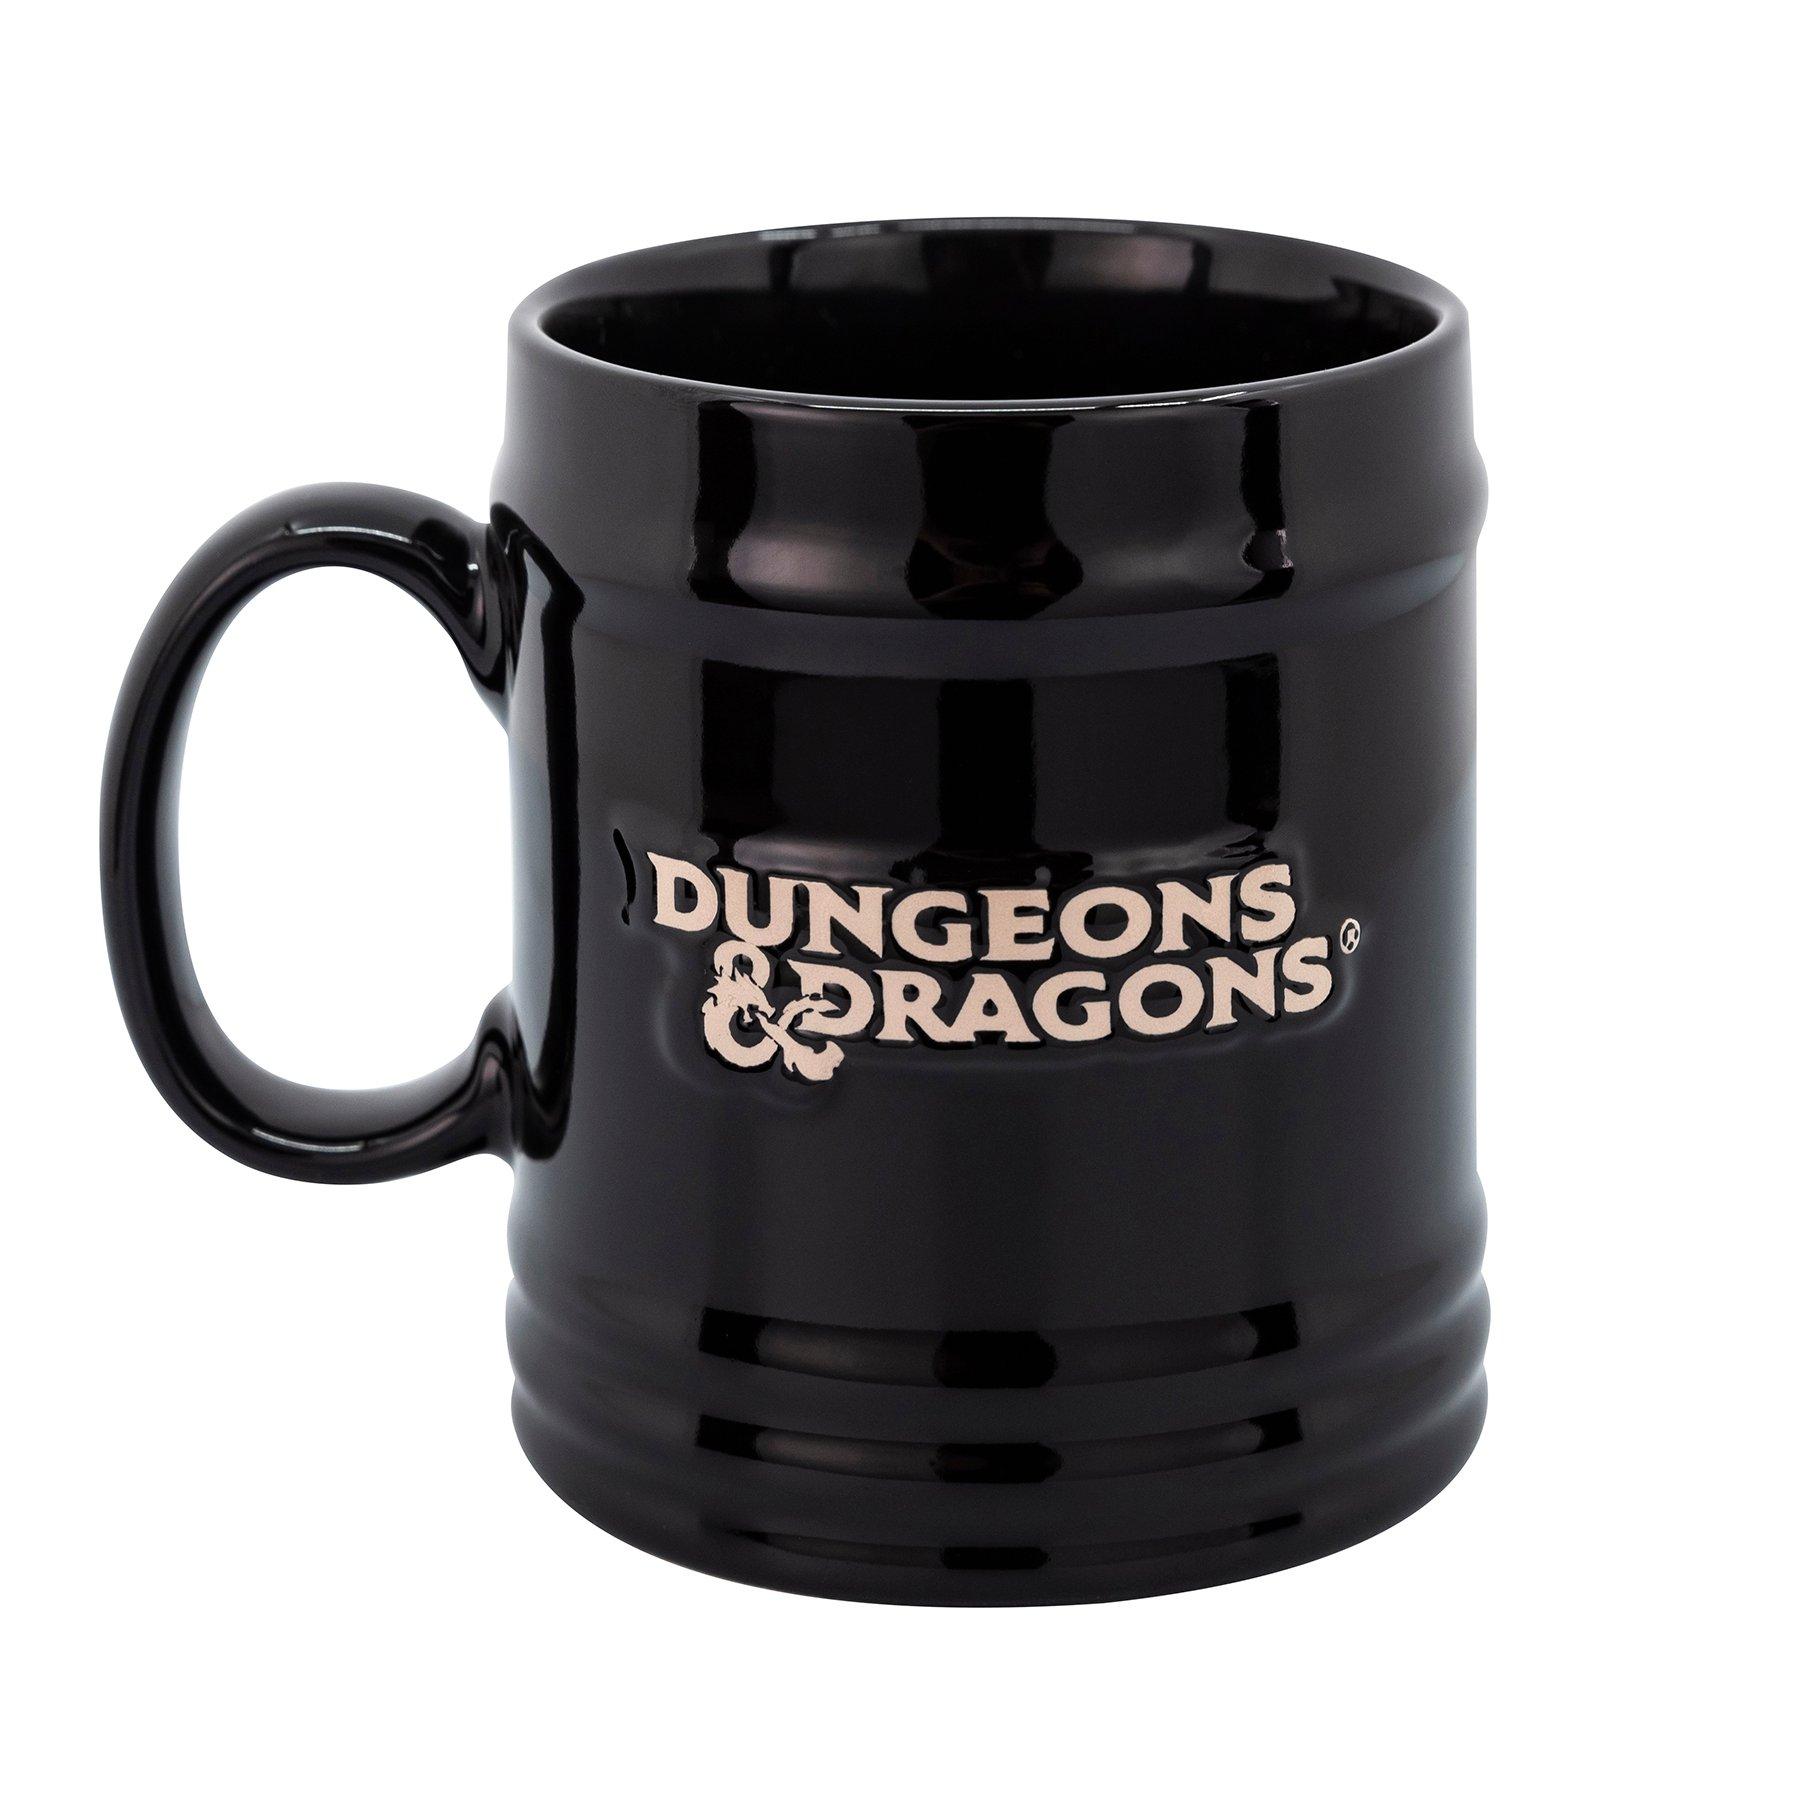 https://media.gamestop.com/i/gamestop/11168014_ALT02/Dungeons-and-Dragons-Coffee-Maker-With-Mug?$pdp$